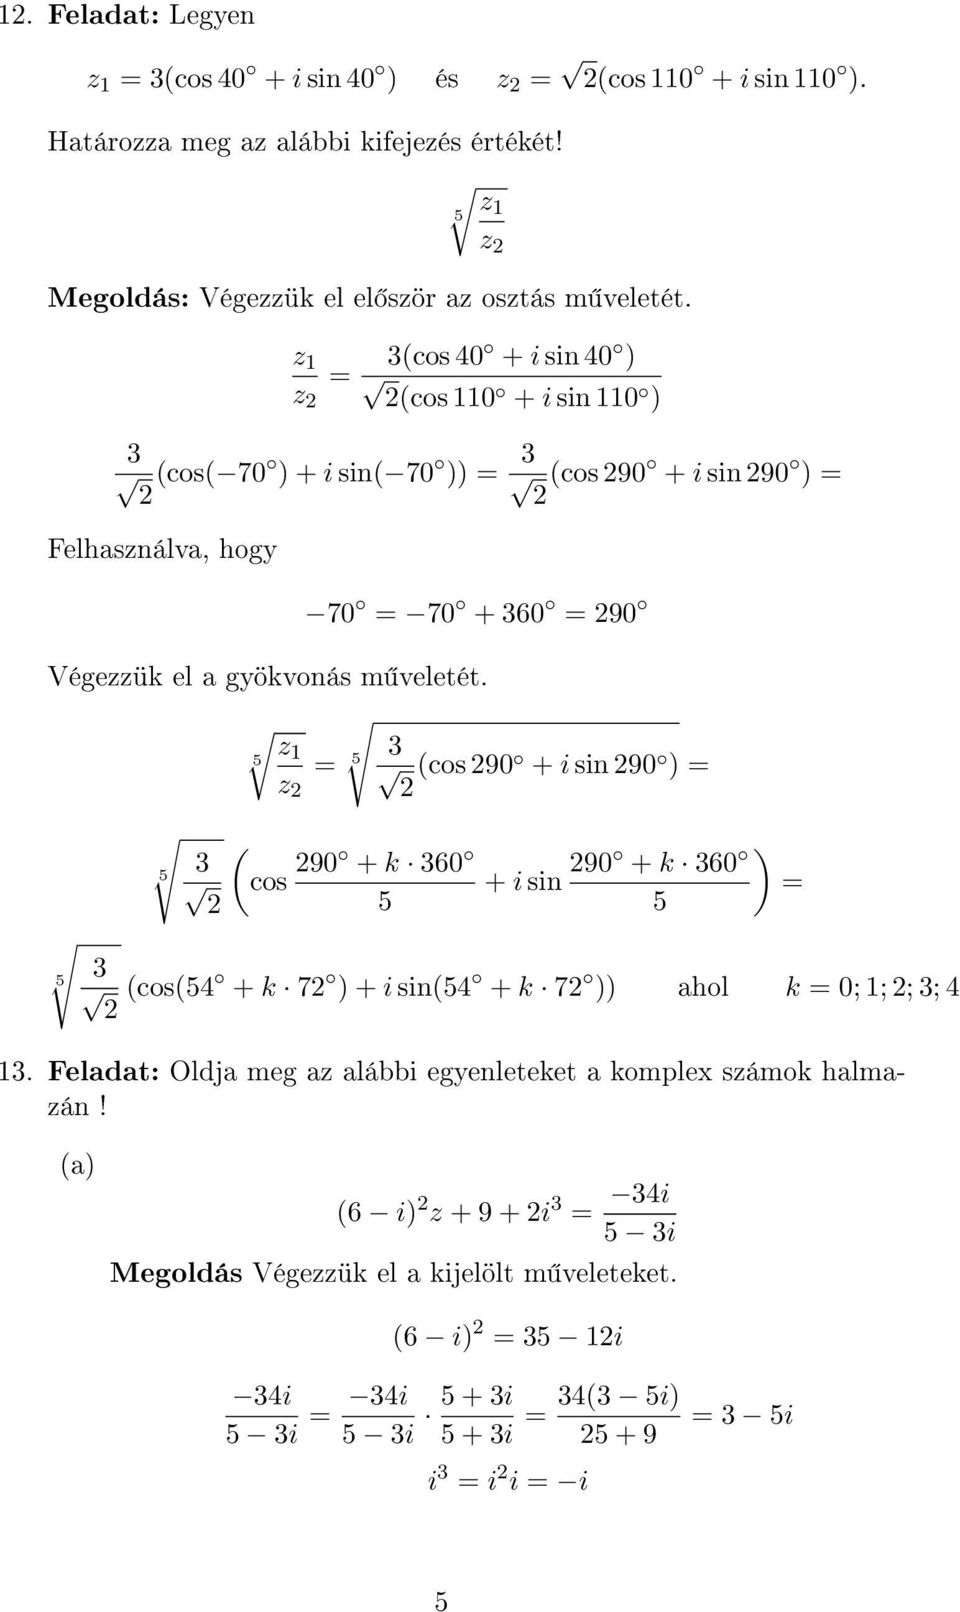 gyökvonás m veletét. z1 (cos 90 z + i sin 90 ) ( cos 90 + k 60 + i sin 90 + k 60 ) (cos(4 + k 7 ) + i sin(4 + k 7 )) ahol k 0; 1; ; ; 4 1.